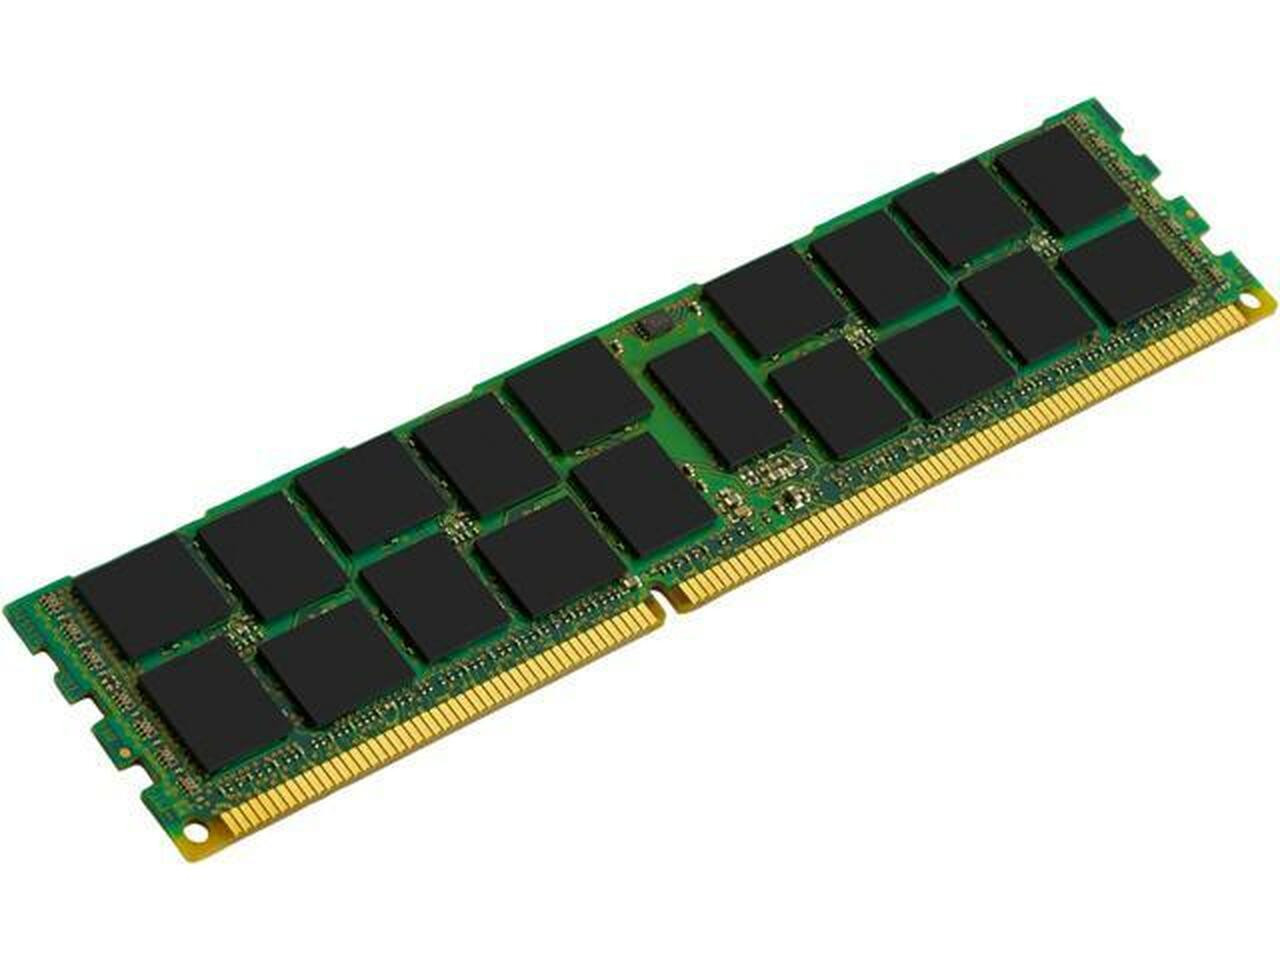 Netpatibles 32GB DDR3 SDRAM Memory Module - MEMDR332LSL02ER13NPM